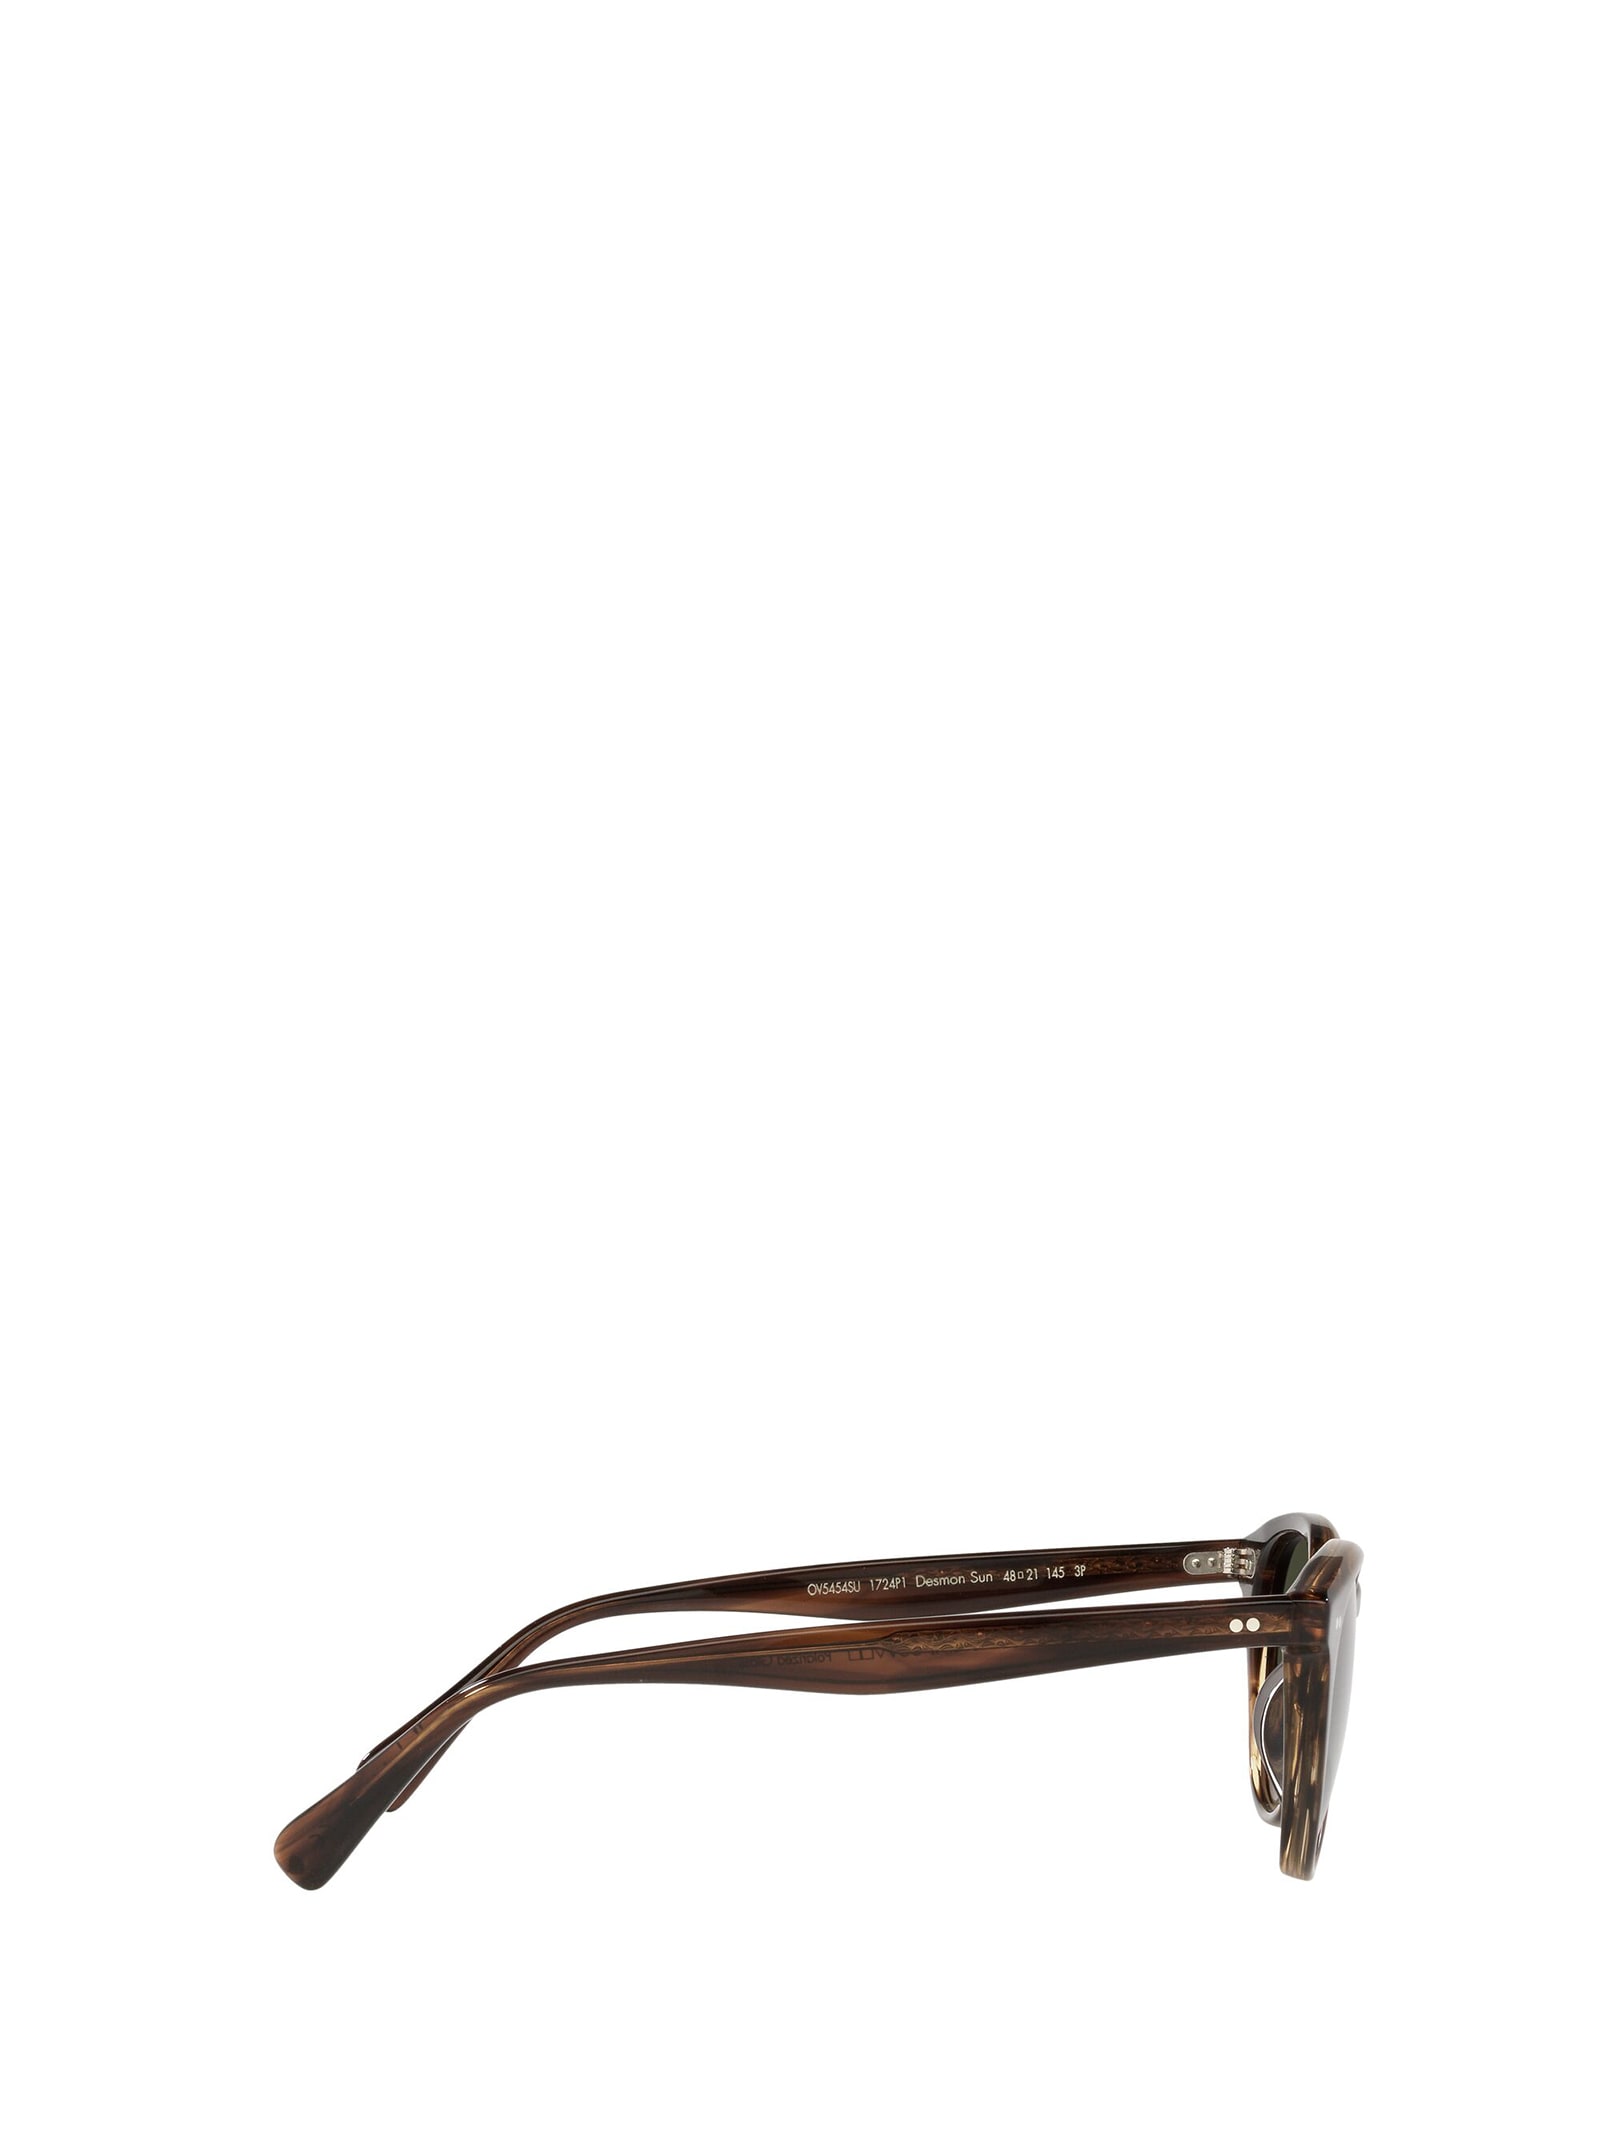 Shop Oliver Peoples Ov5454su Tuscany Tortoise Sunglasses